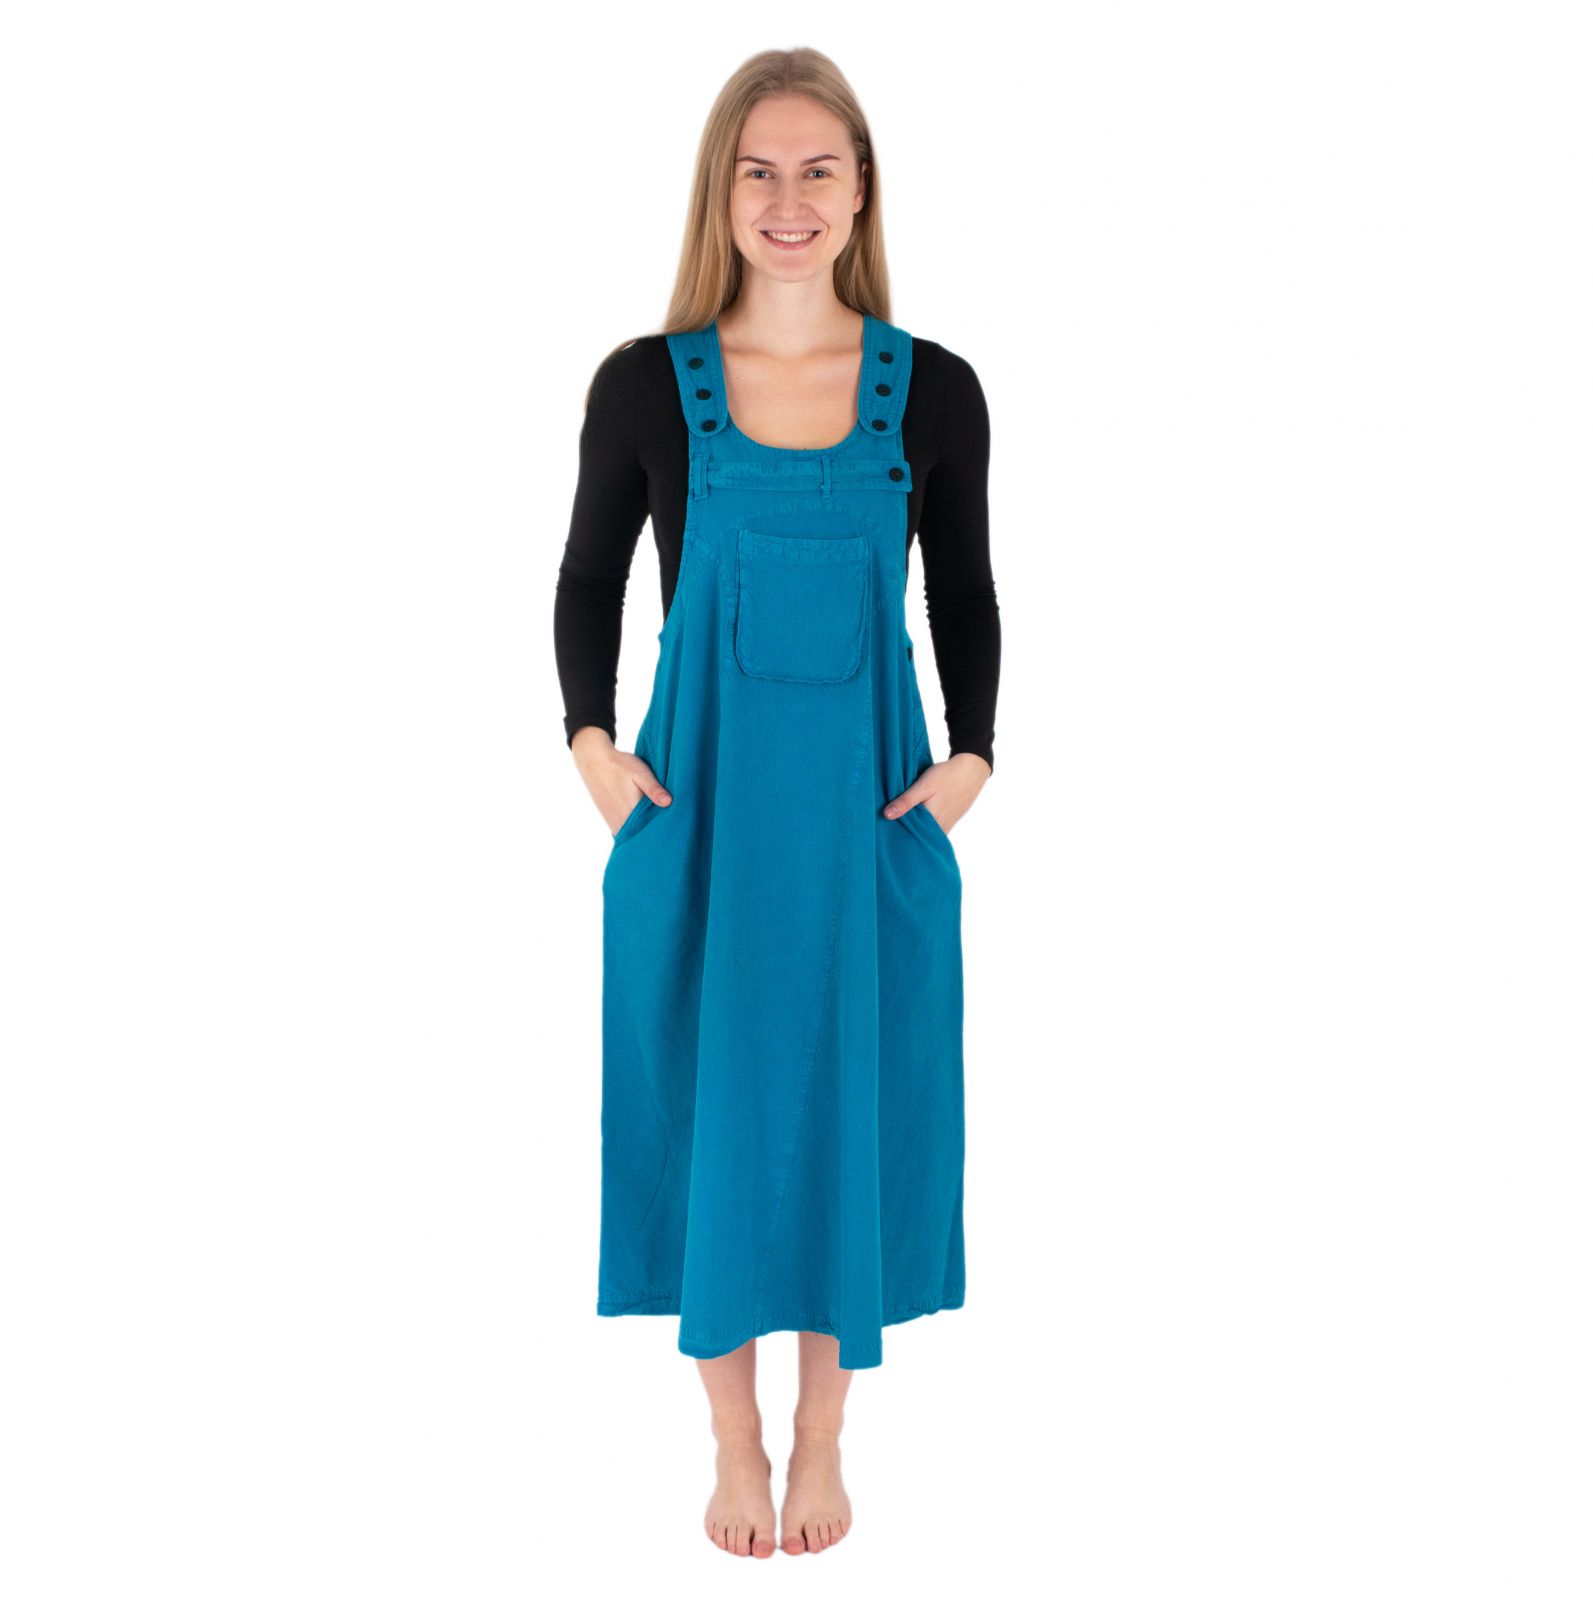 Dungaree / apron cotton dress Jayleen Cyan blue Nepal